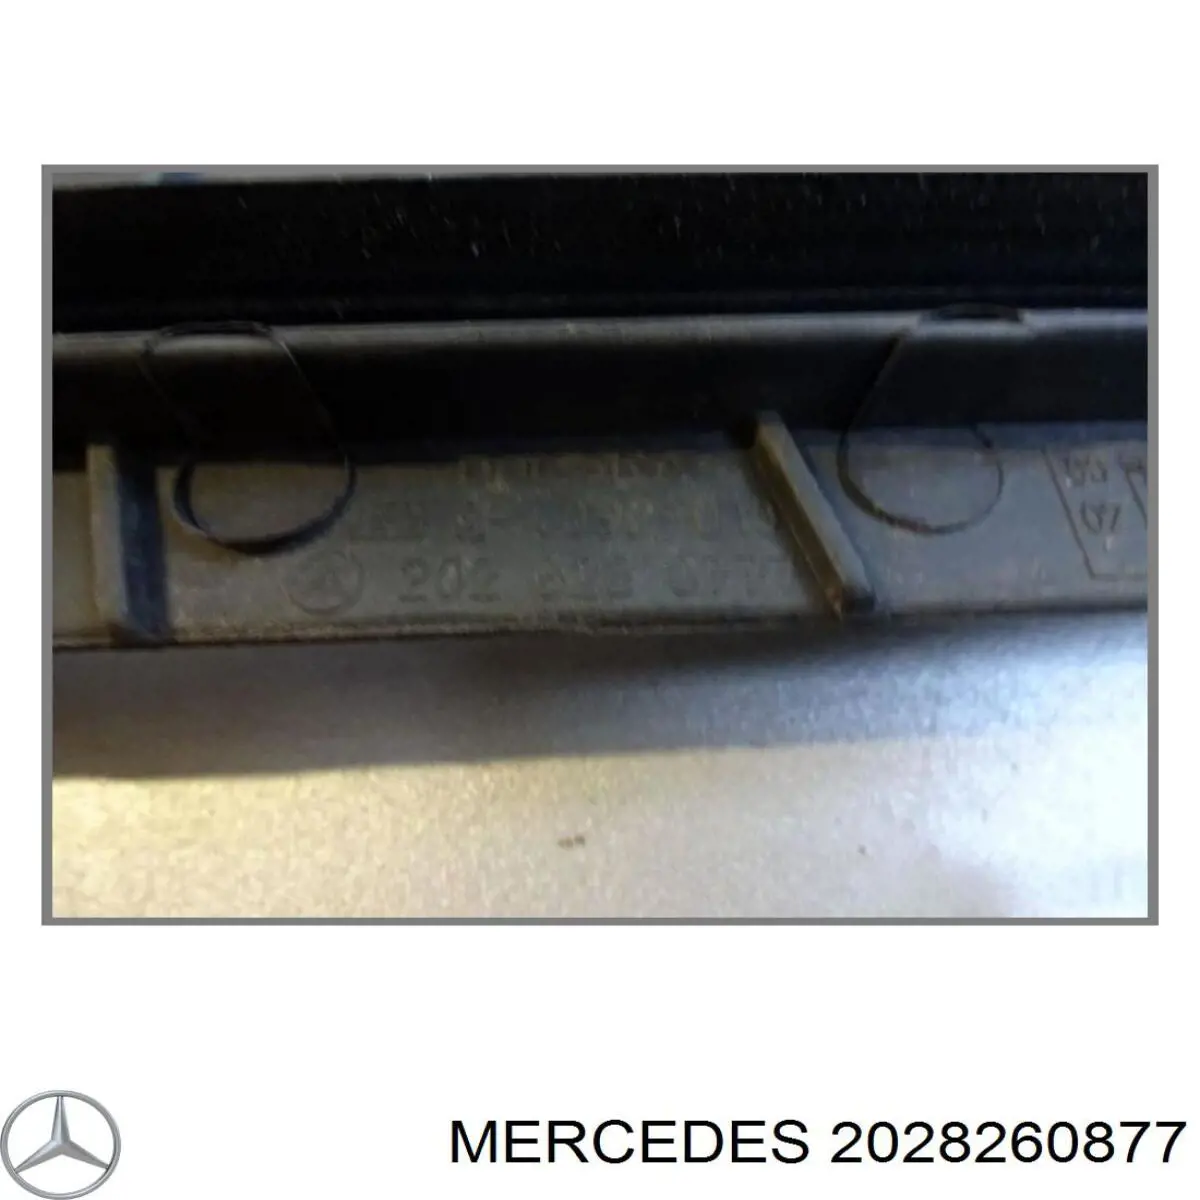 A2028260877 Mercedes listón del faro izquierdo